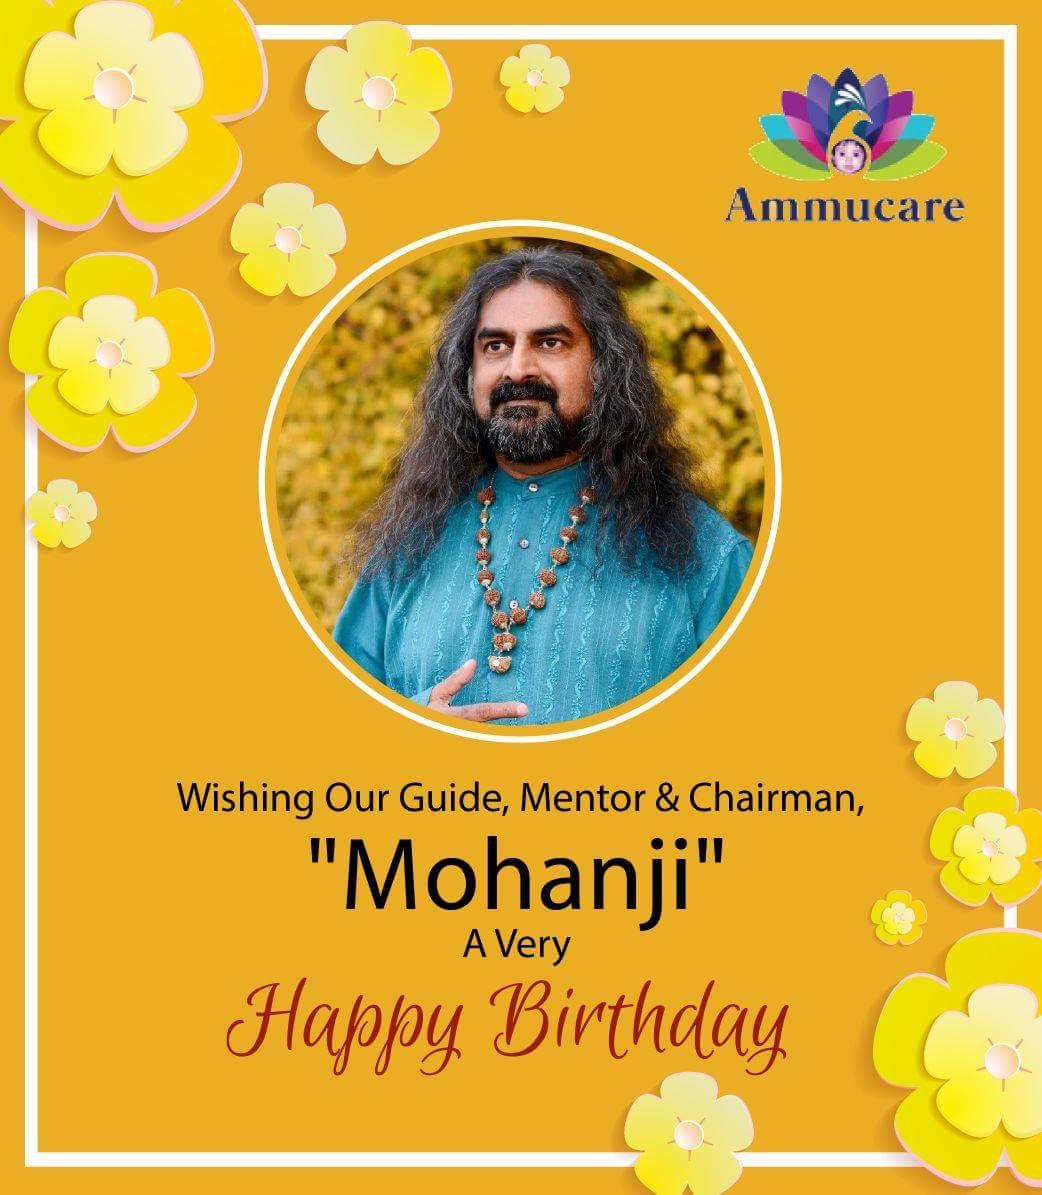 Ammucare - Happy birthday Mohanji